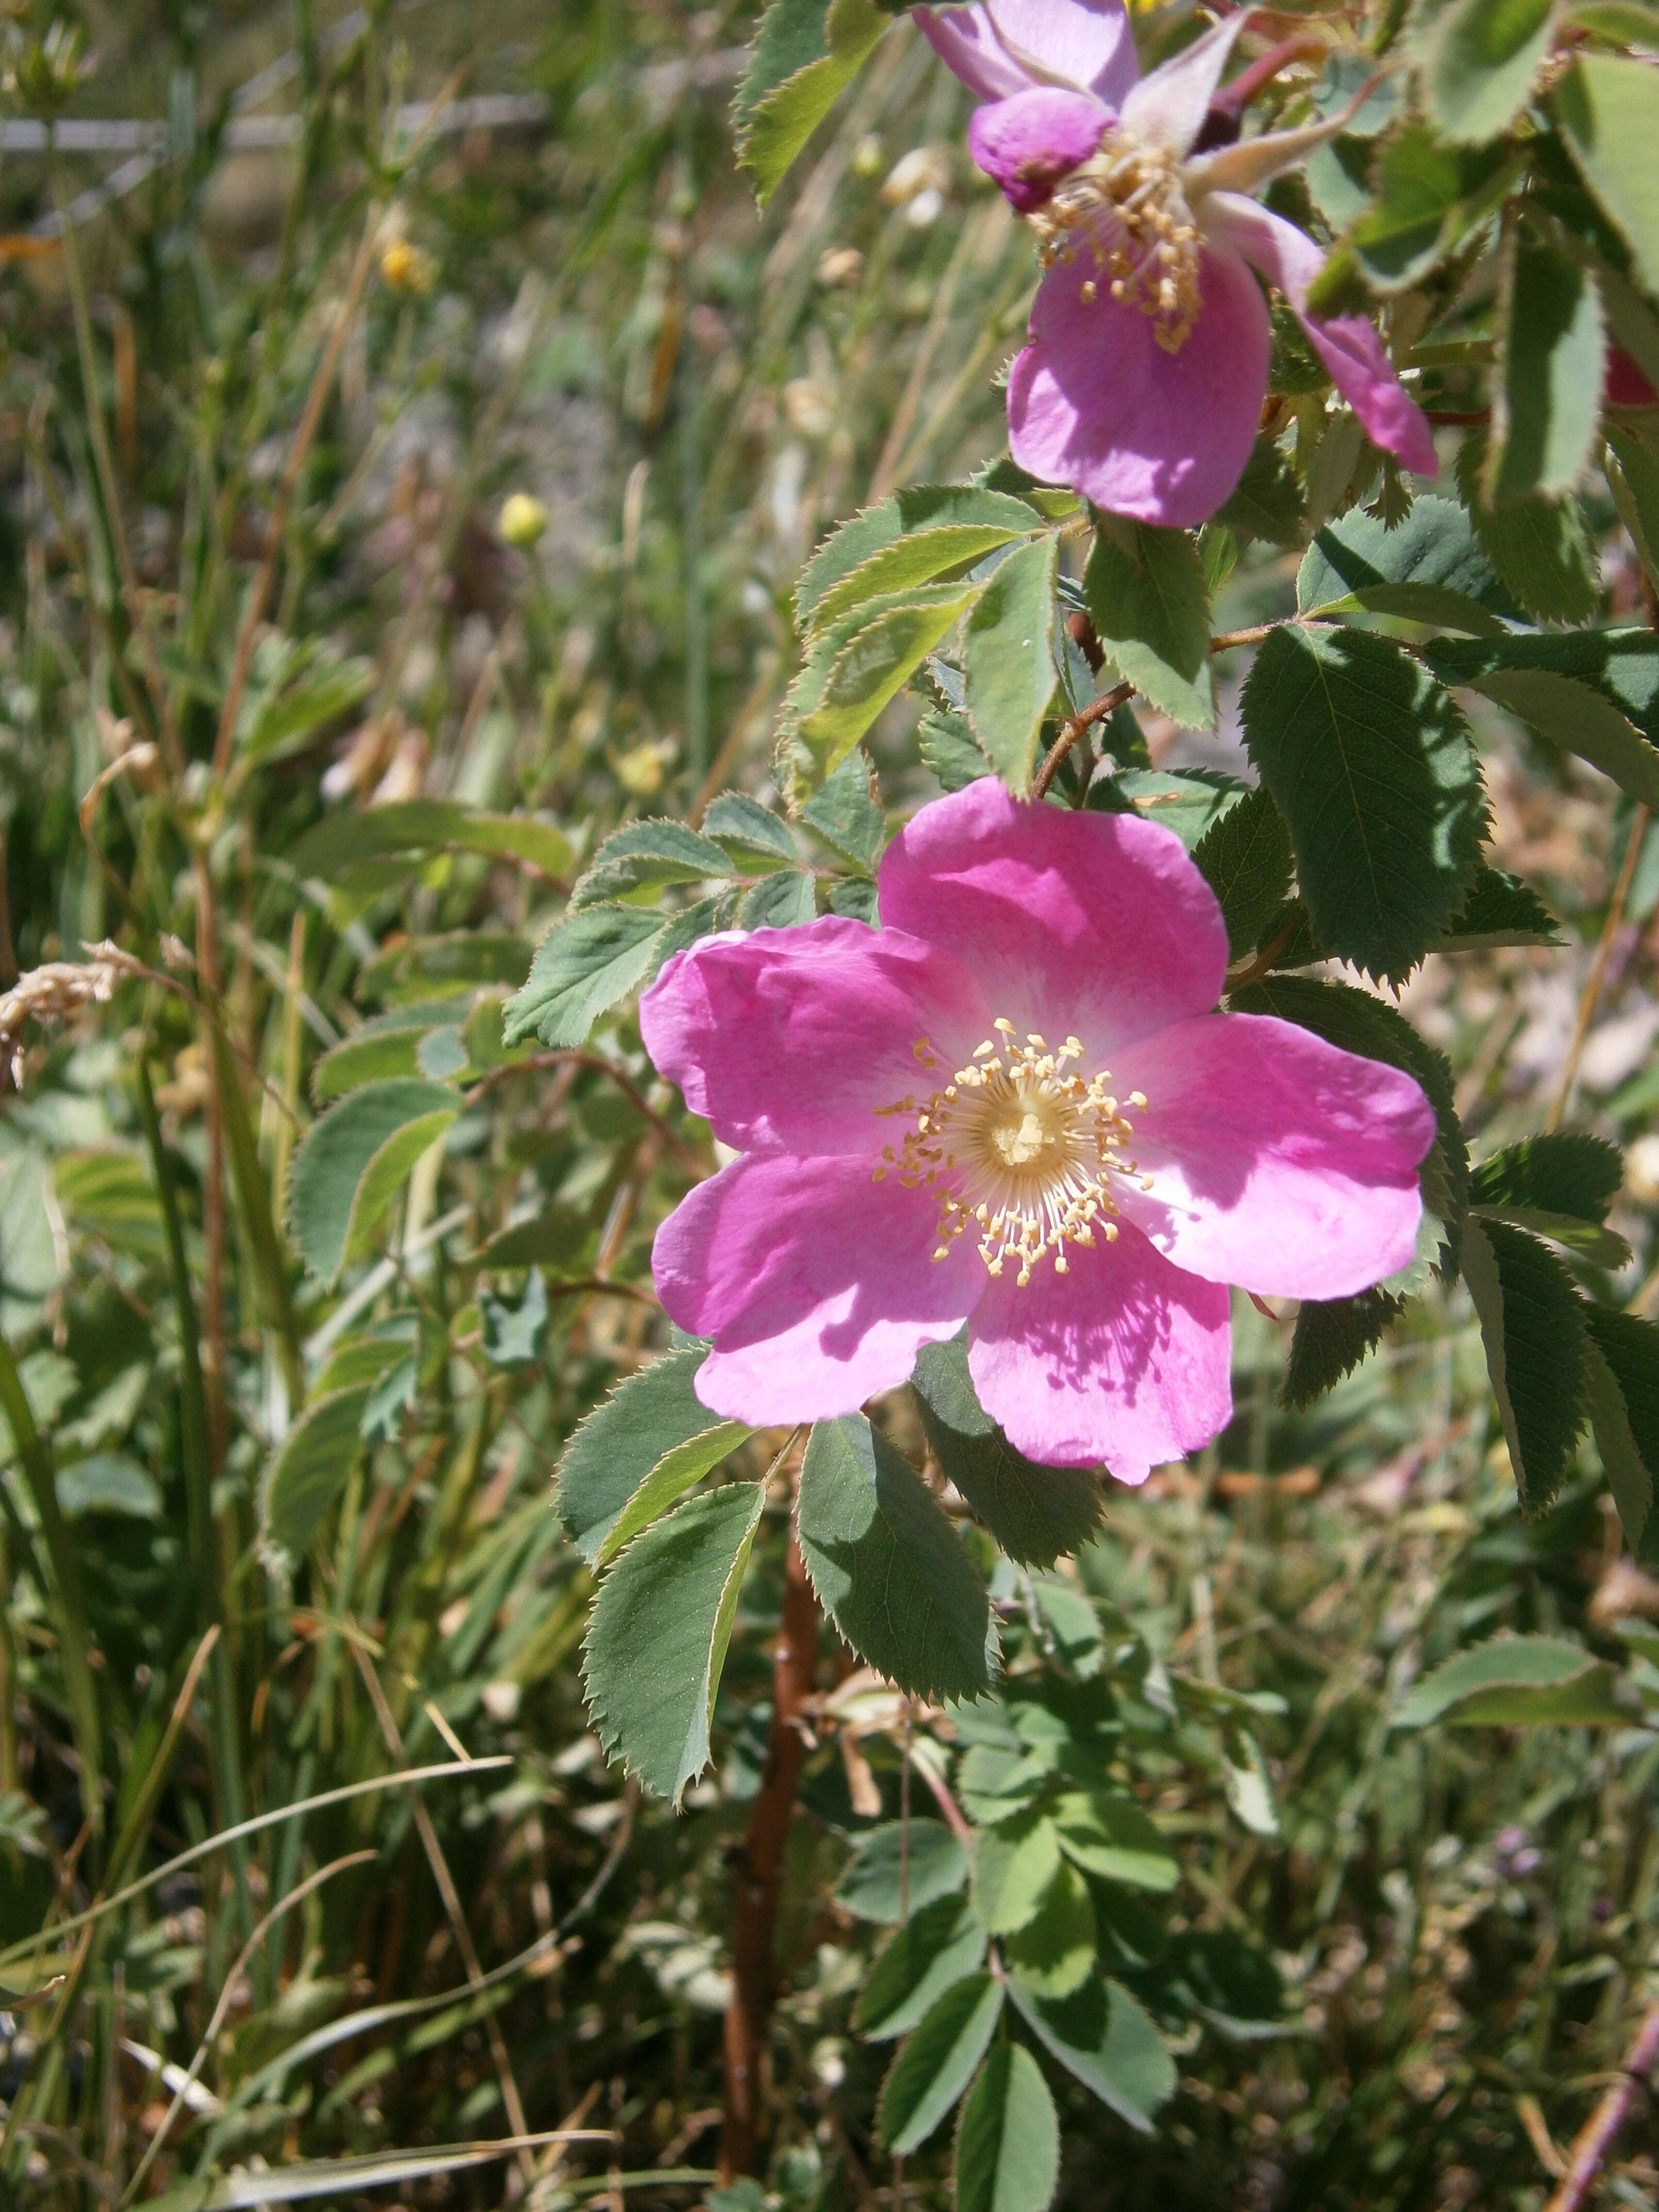 Image of alpine rose